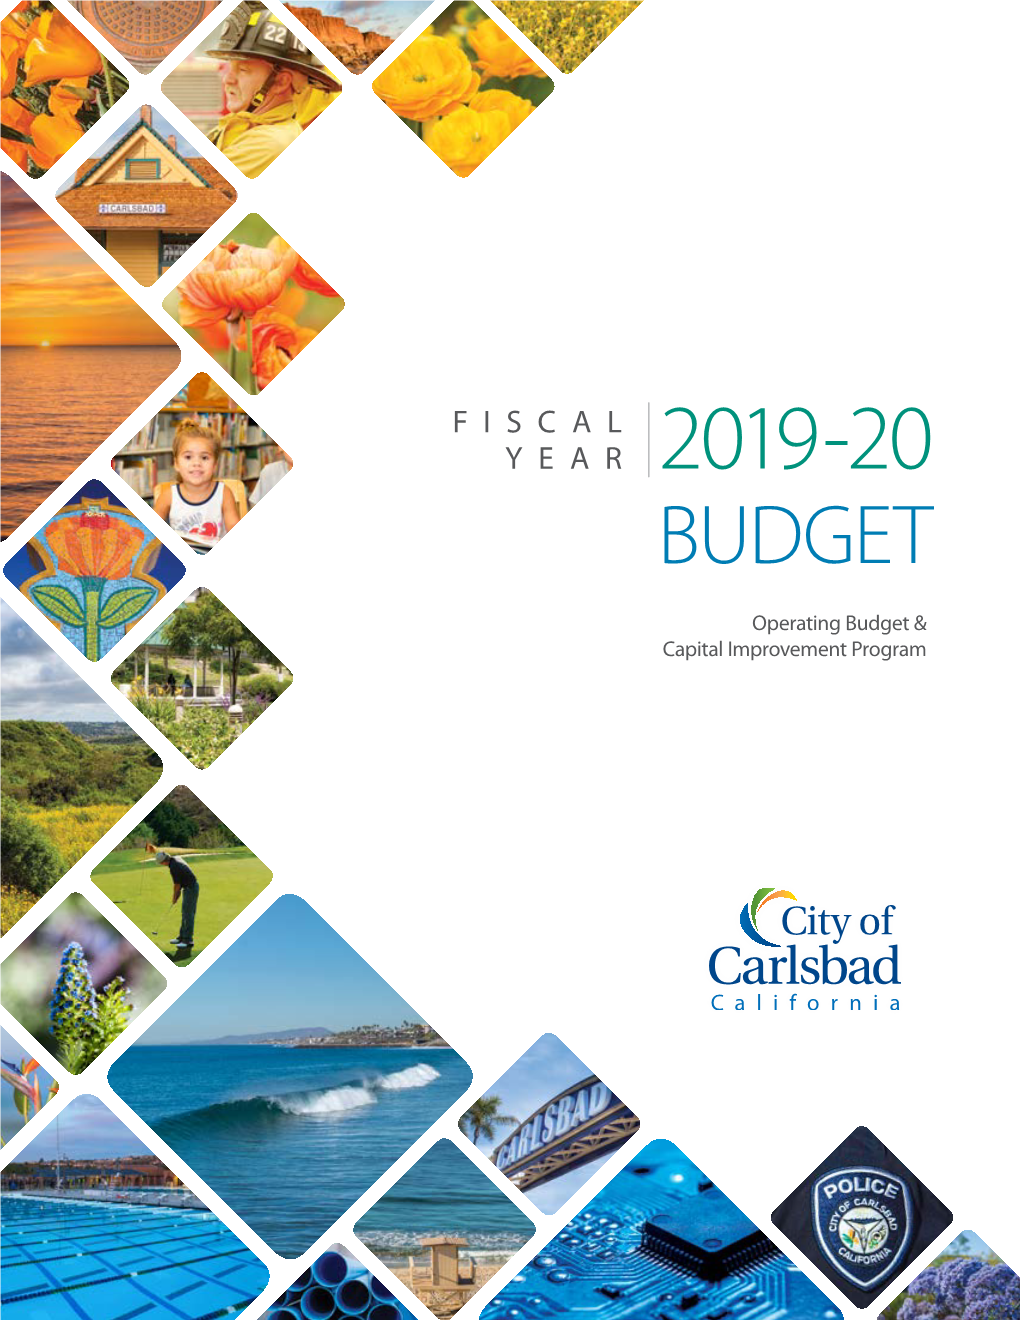 FY 19-20 Operating Budget & Capital Improvement Program